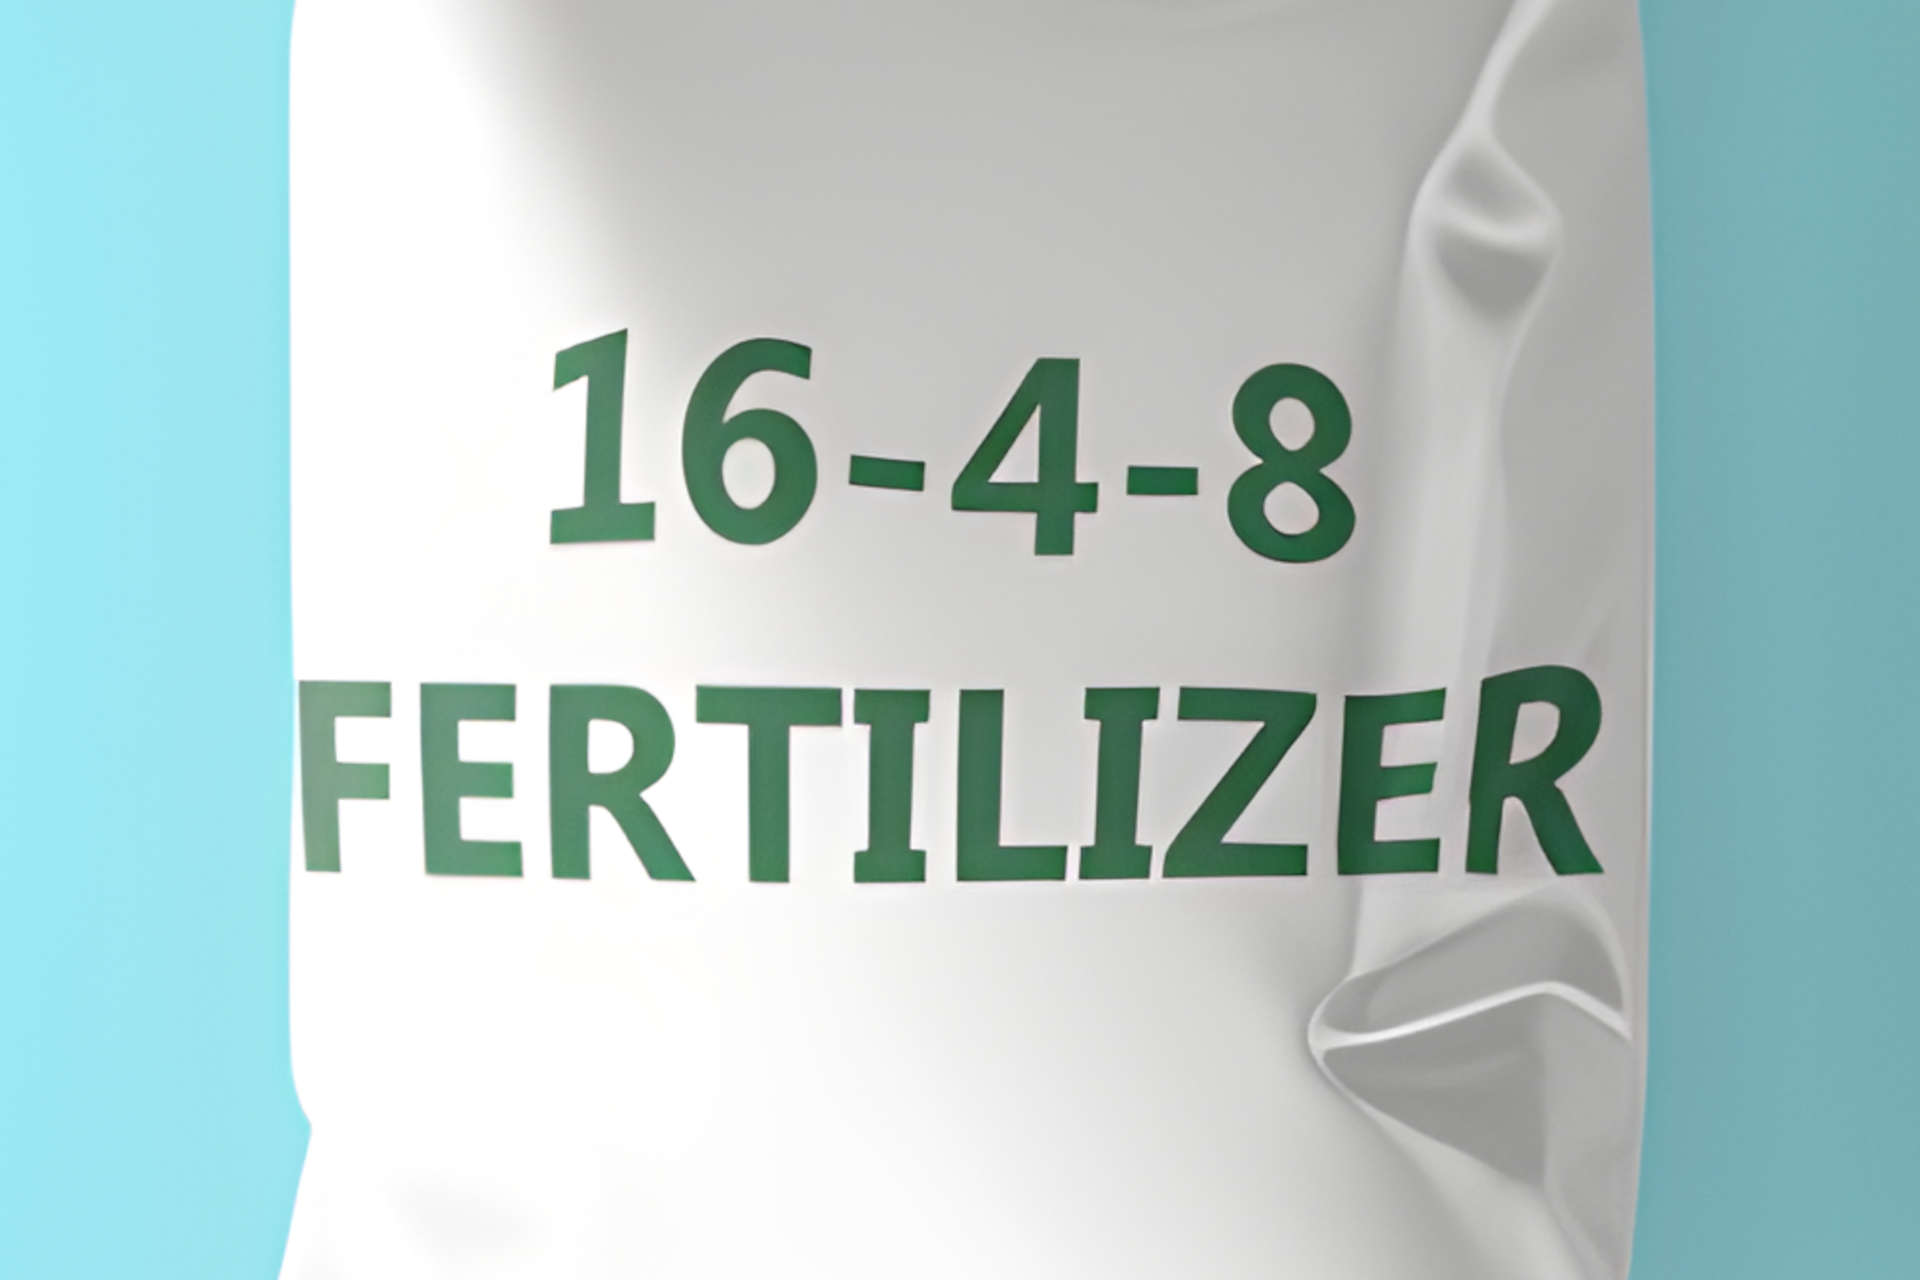 Winter Fertilizer Numbers Explained